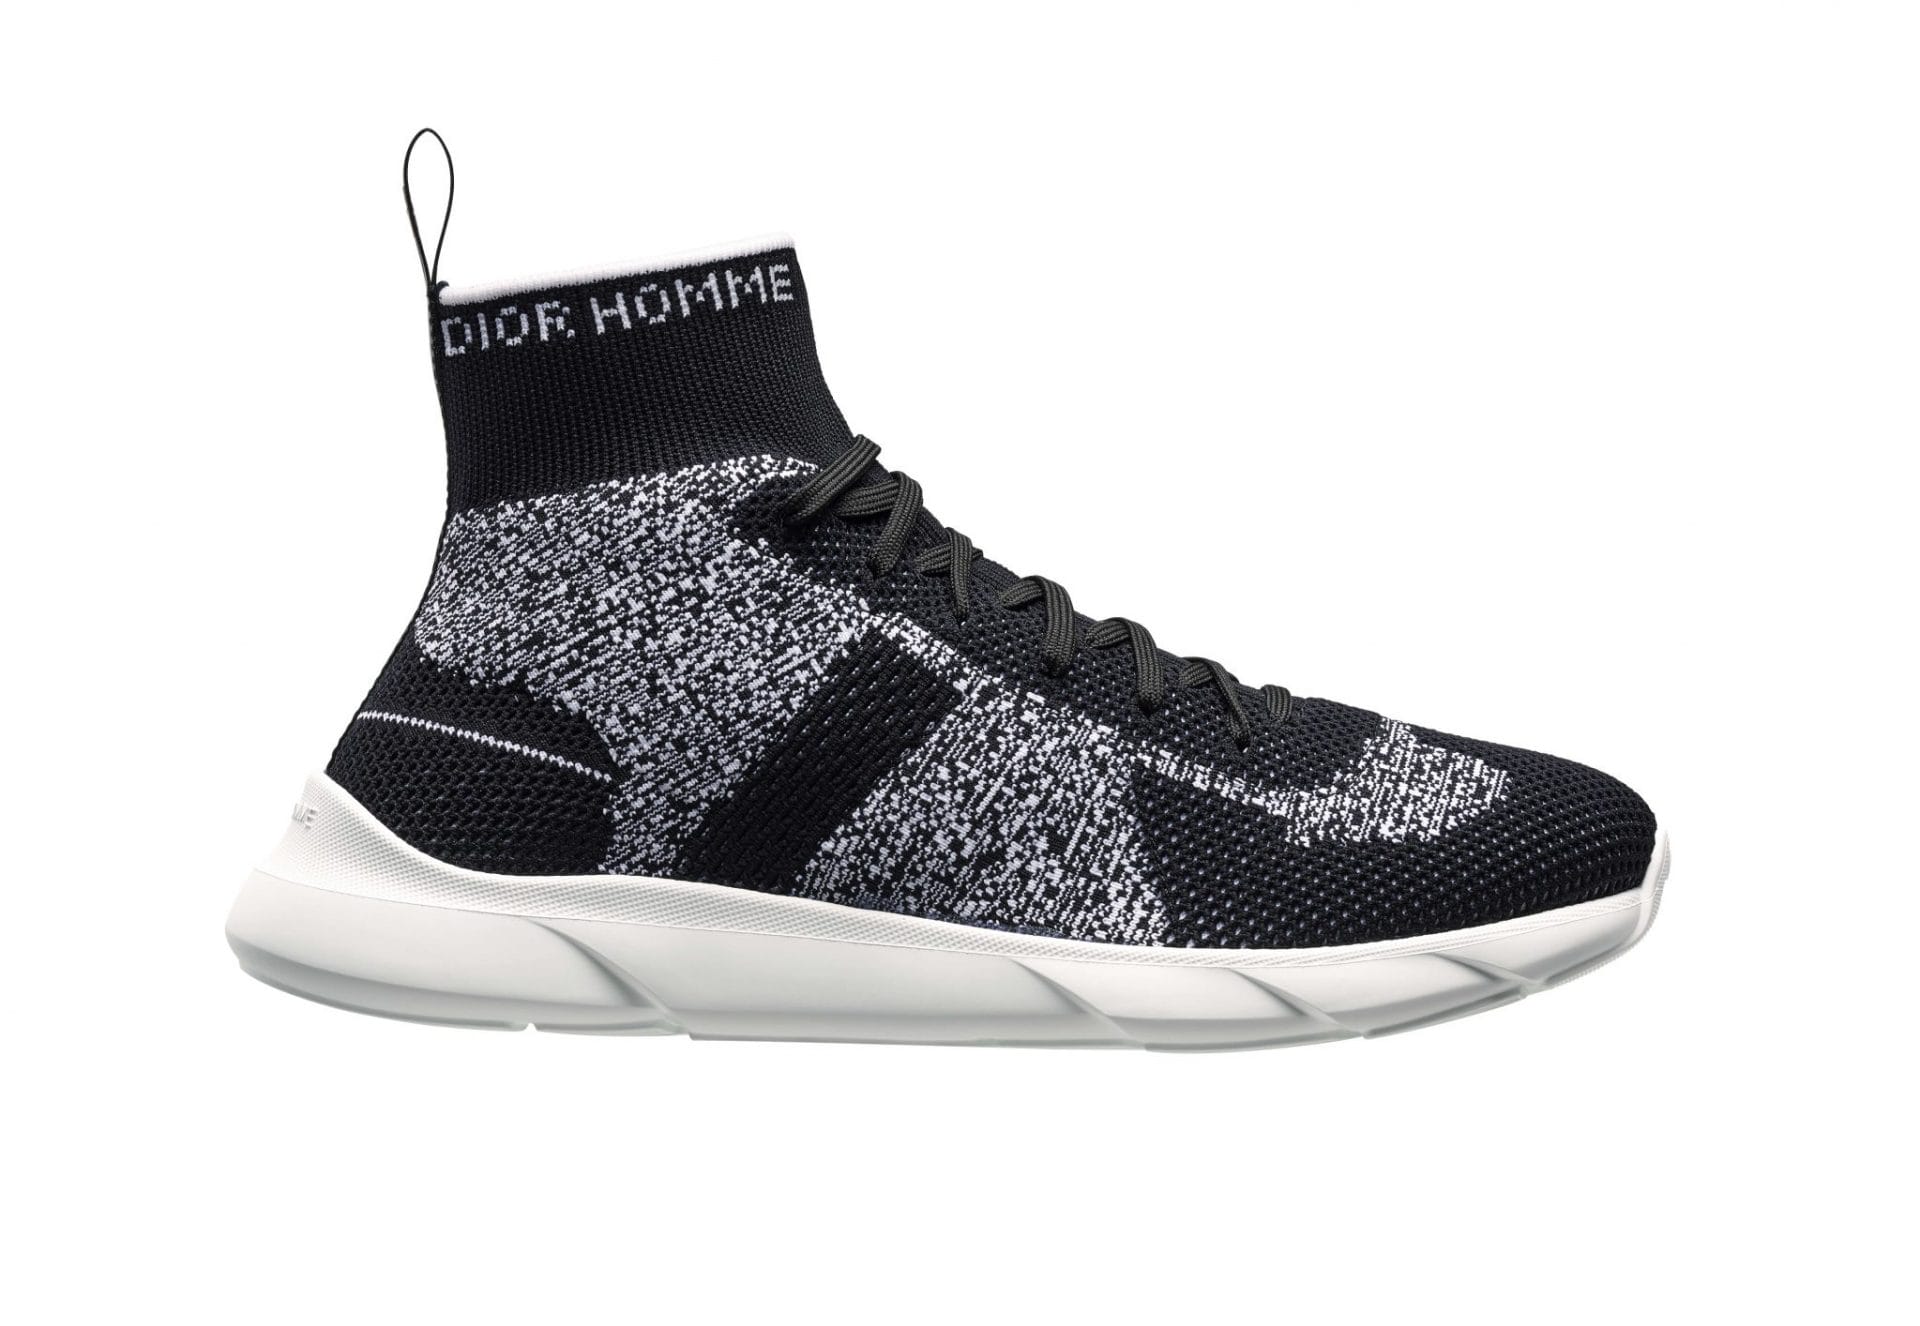 Dior Homme B21 Sneakers Freshly Designed by Kris Van Assche for Spring ...